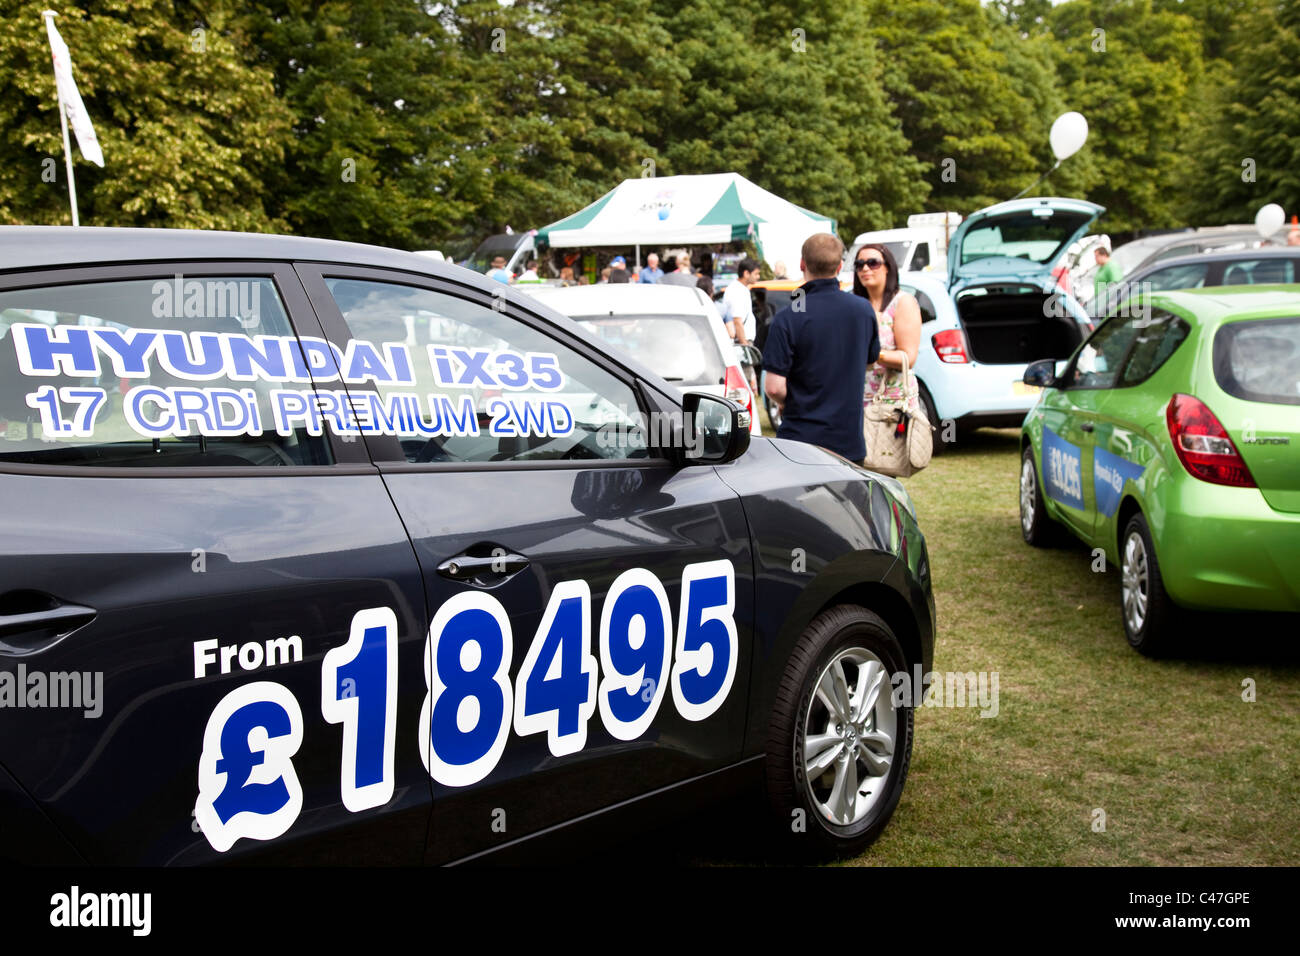 Hyundai car dealership promotion at a motorshow event England UK Stock Photo